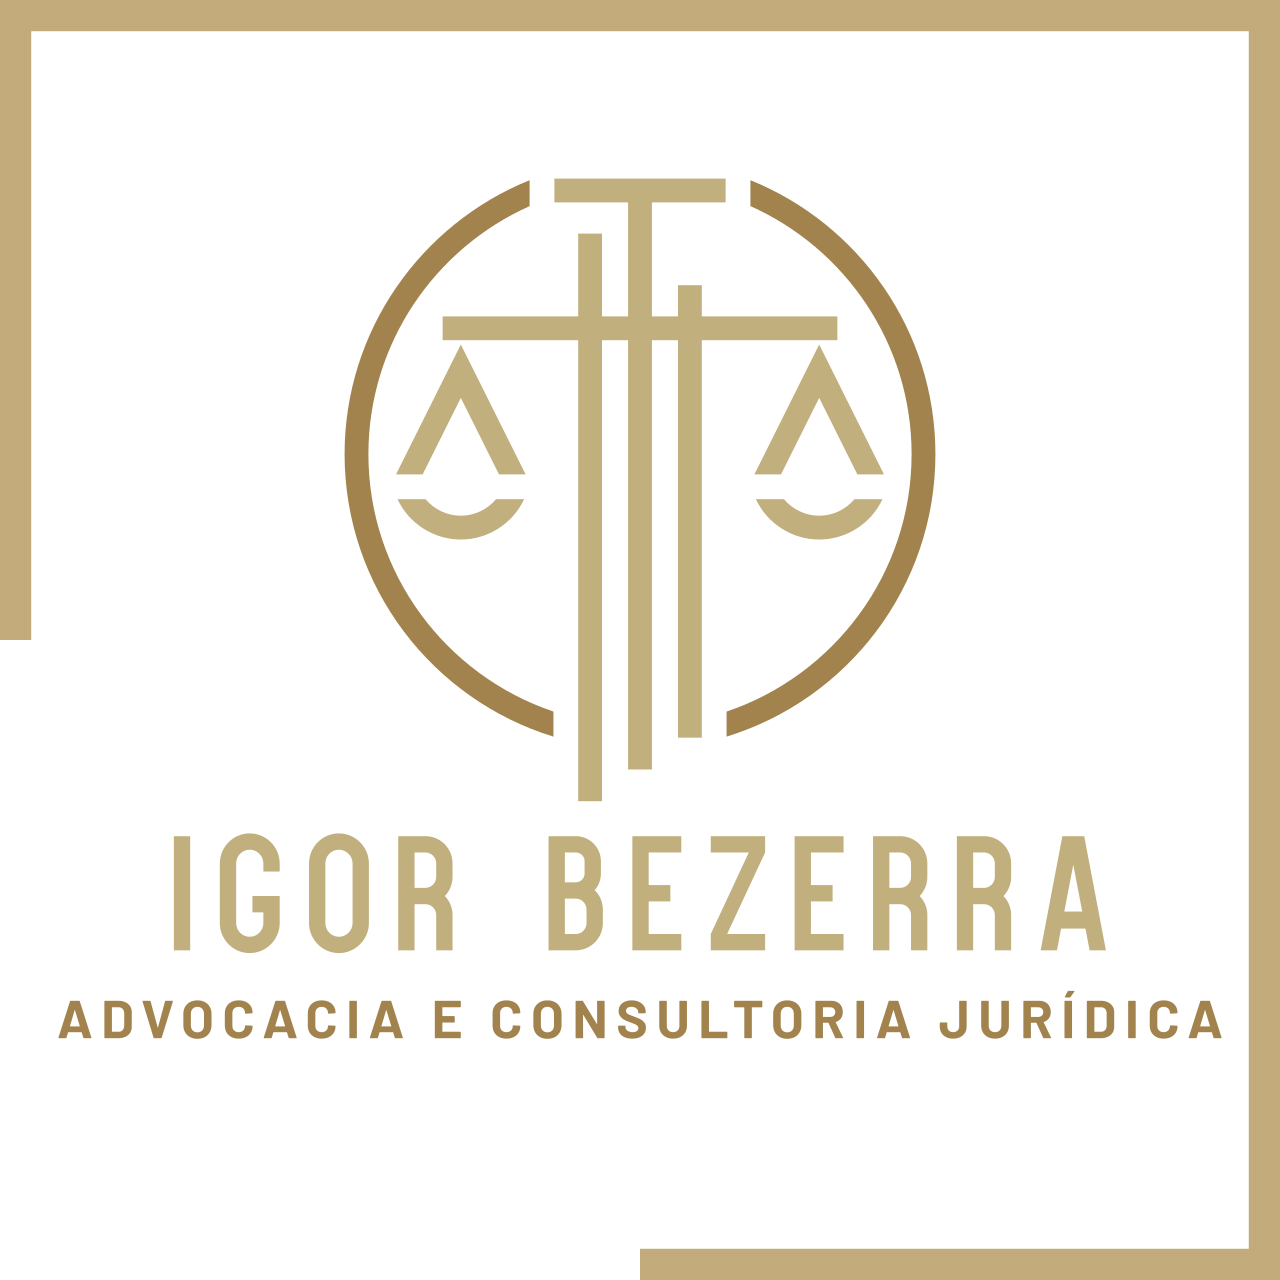 Igor Bezerra's logo